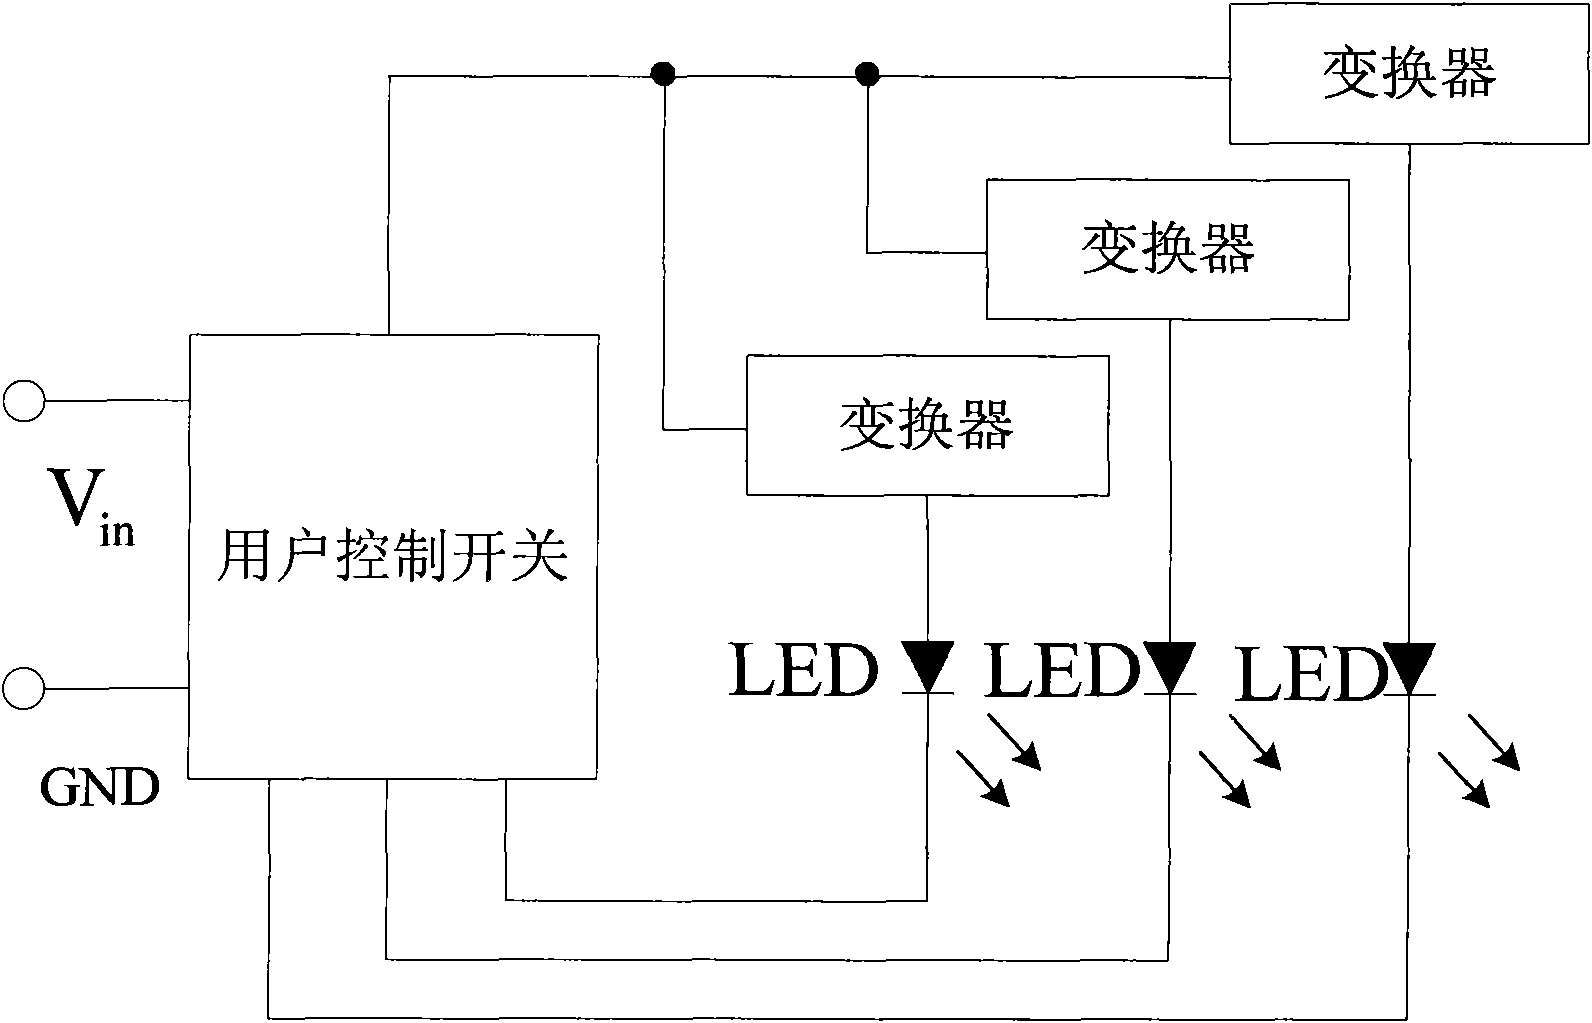 LED driver, LED light-emitting circuit and LED light source